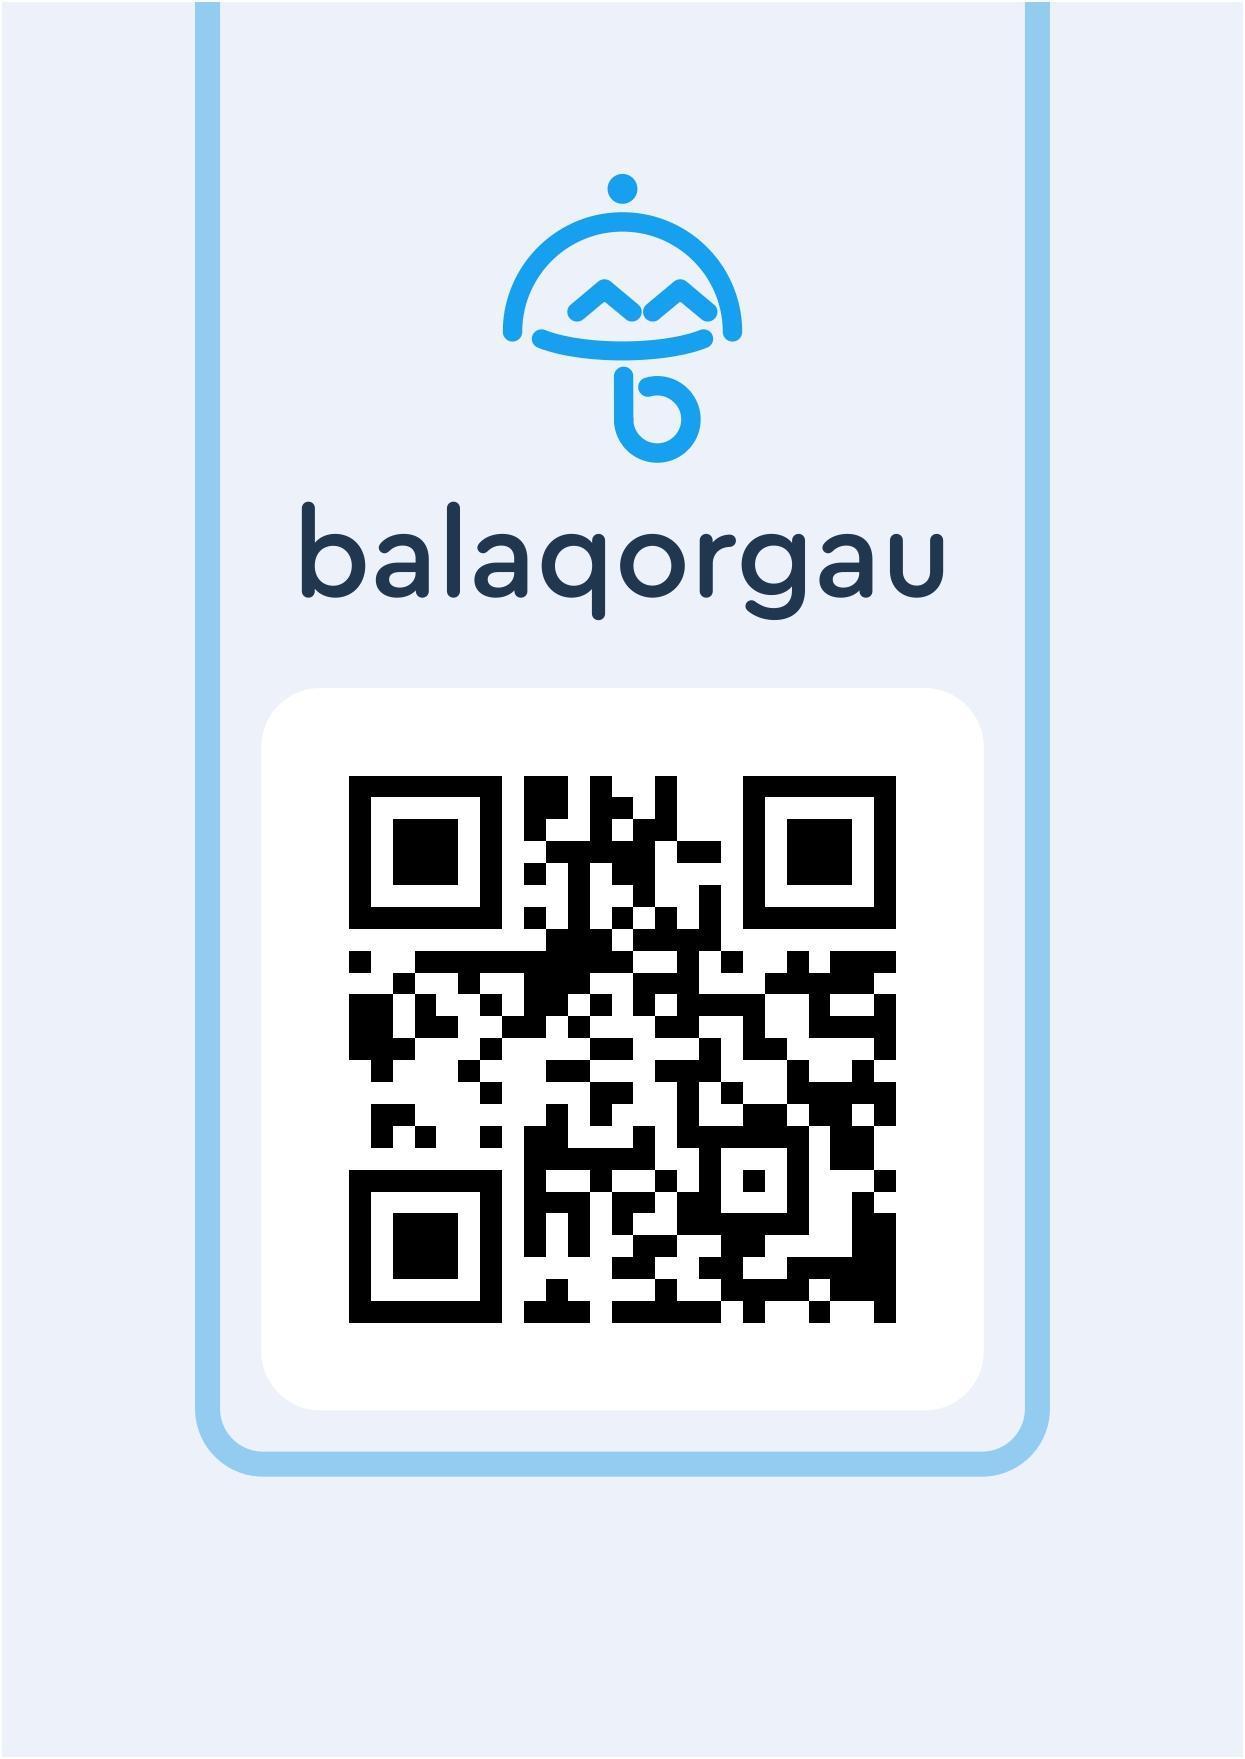 «Бал Qorgau» - «balaqorgau» веб-сайты